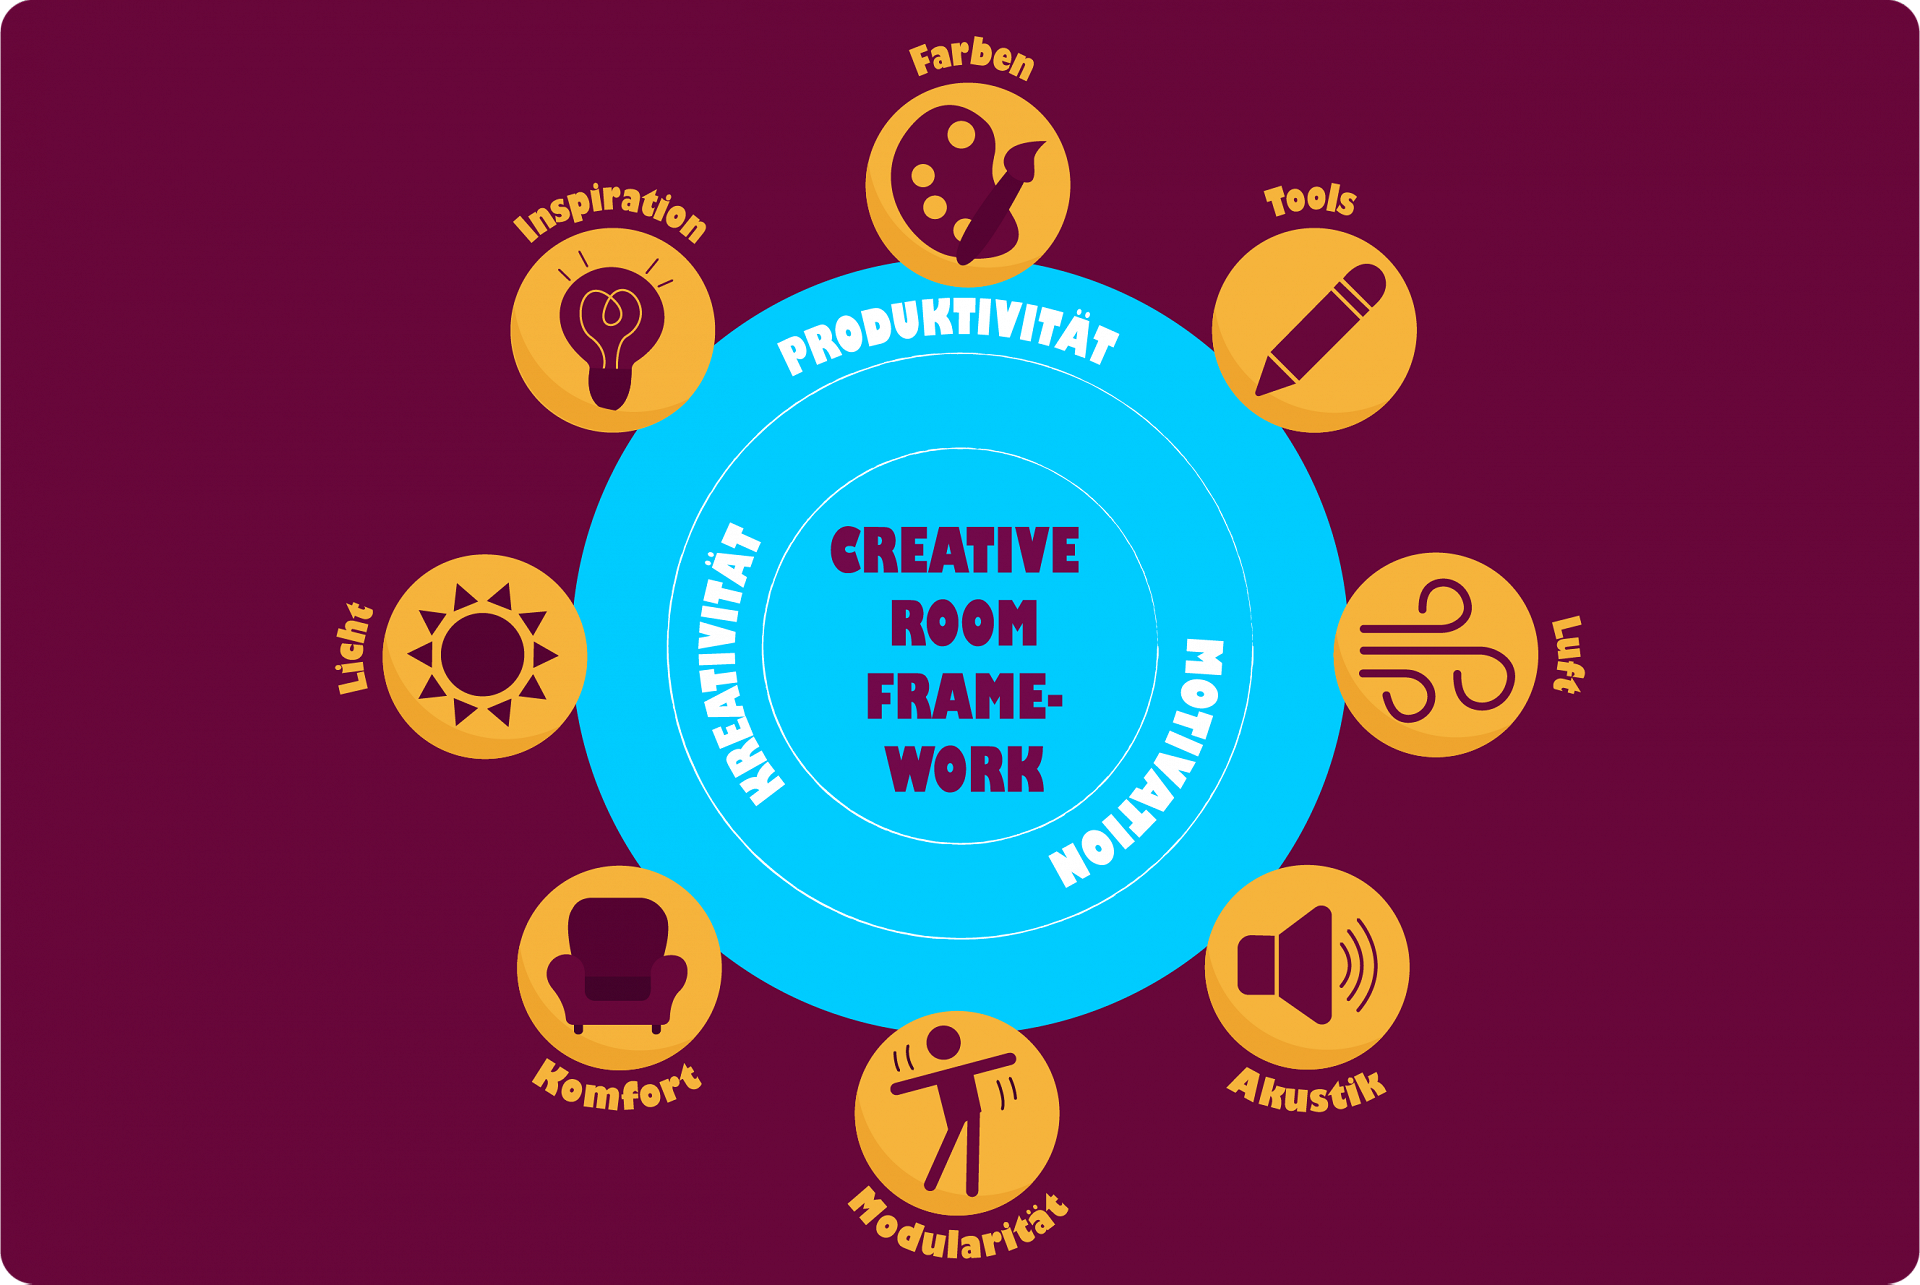 Creative Room Framework - Motivation, Kreativität und Produktivität ankurbeln